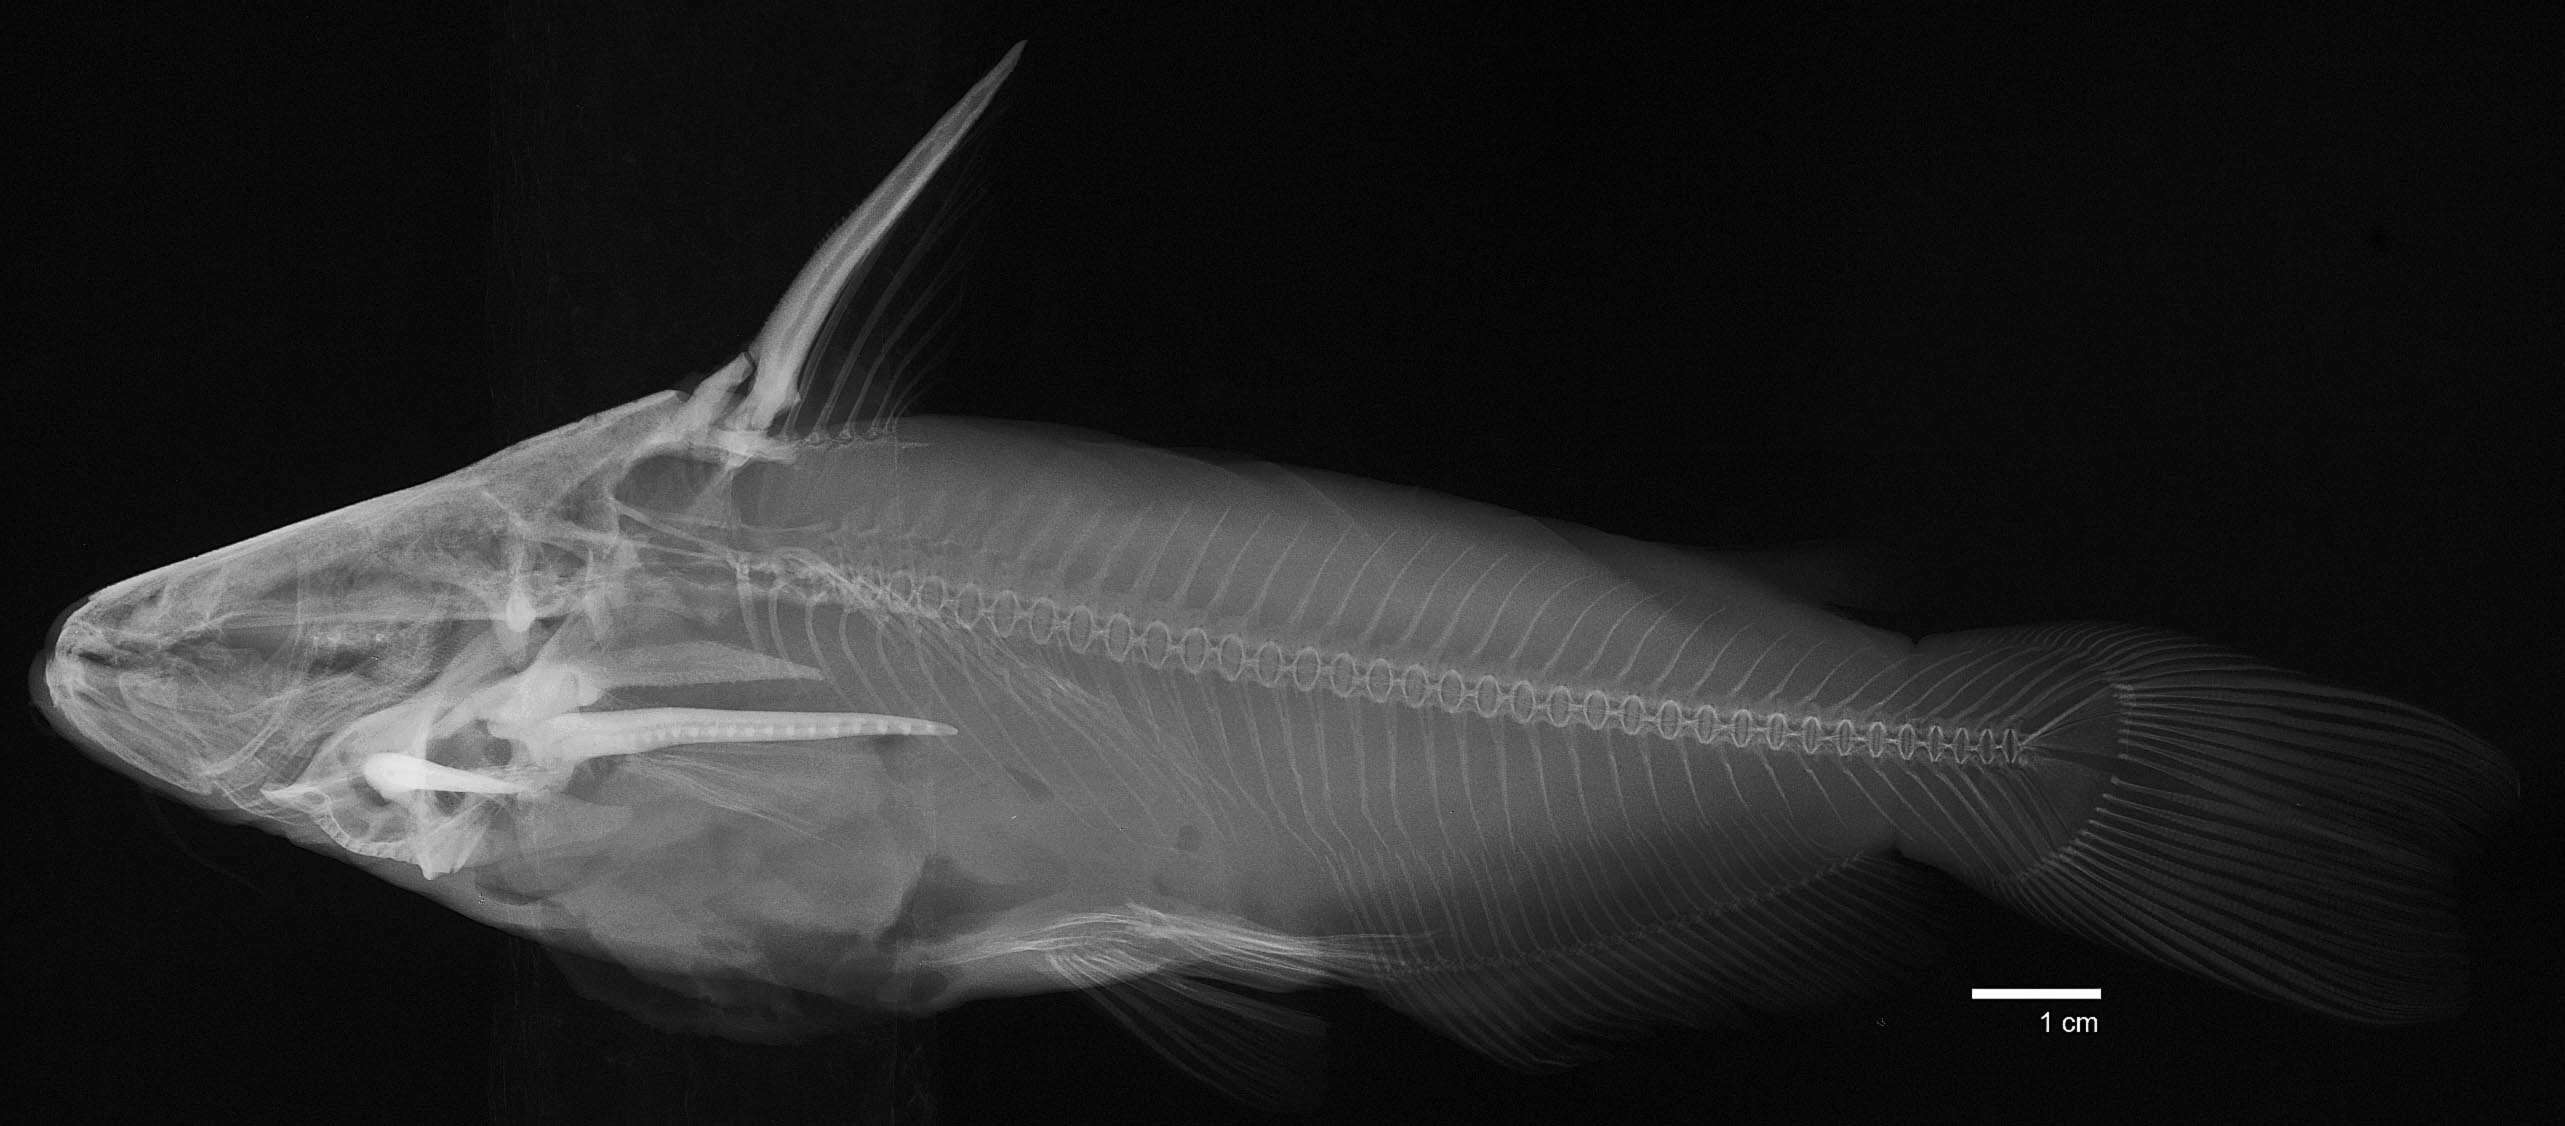 Image of Trachelyopterus peloichthys (Schultz 1944)